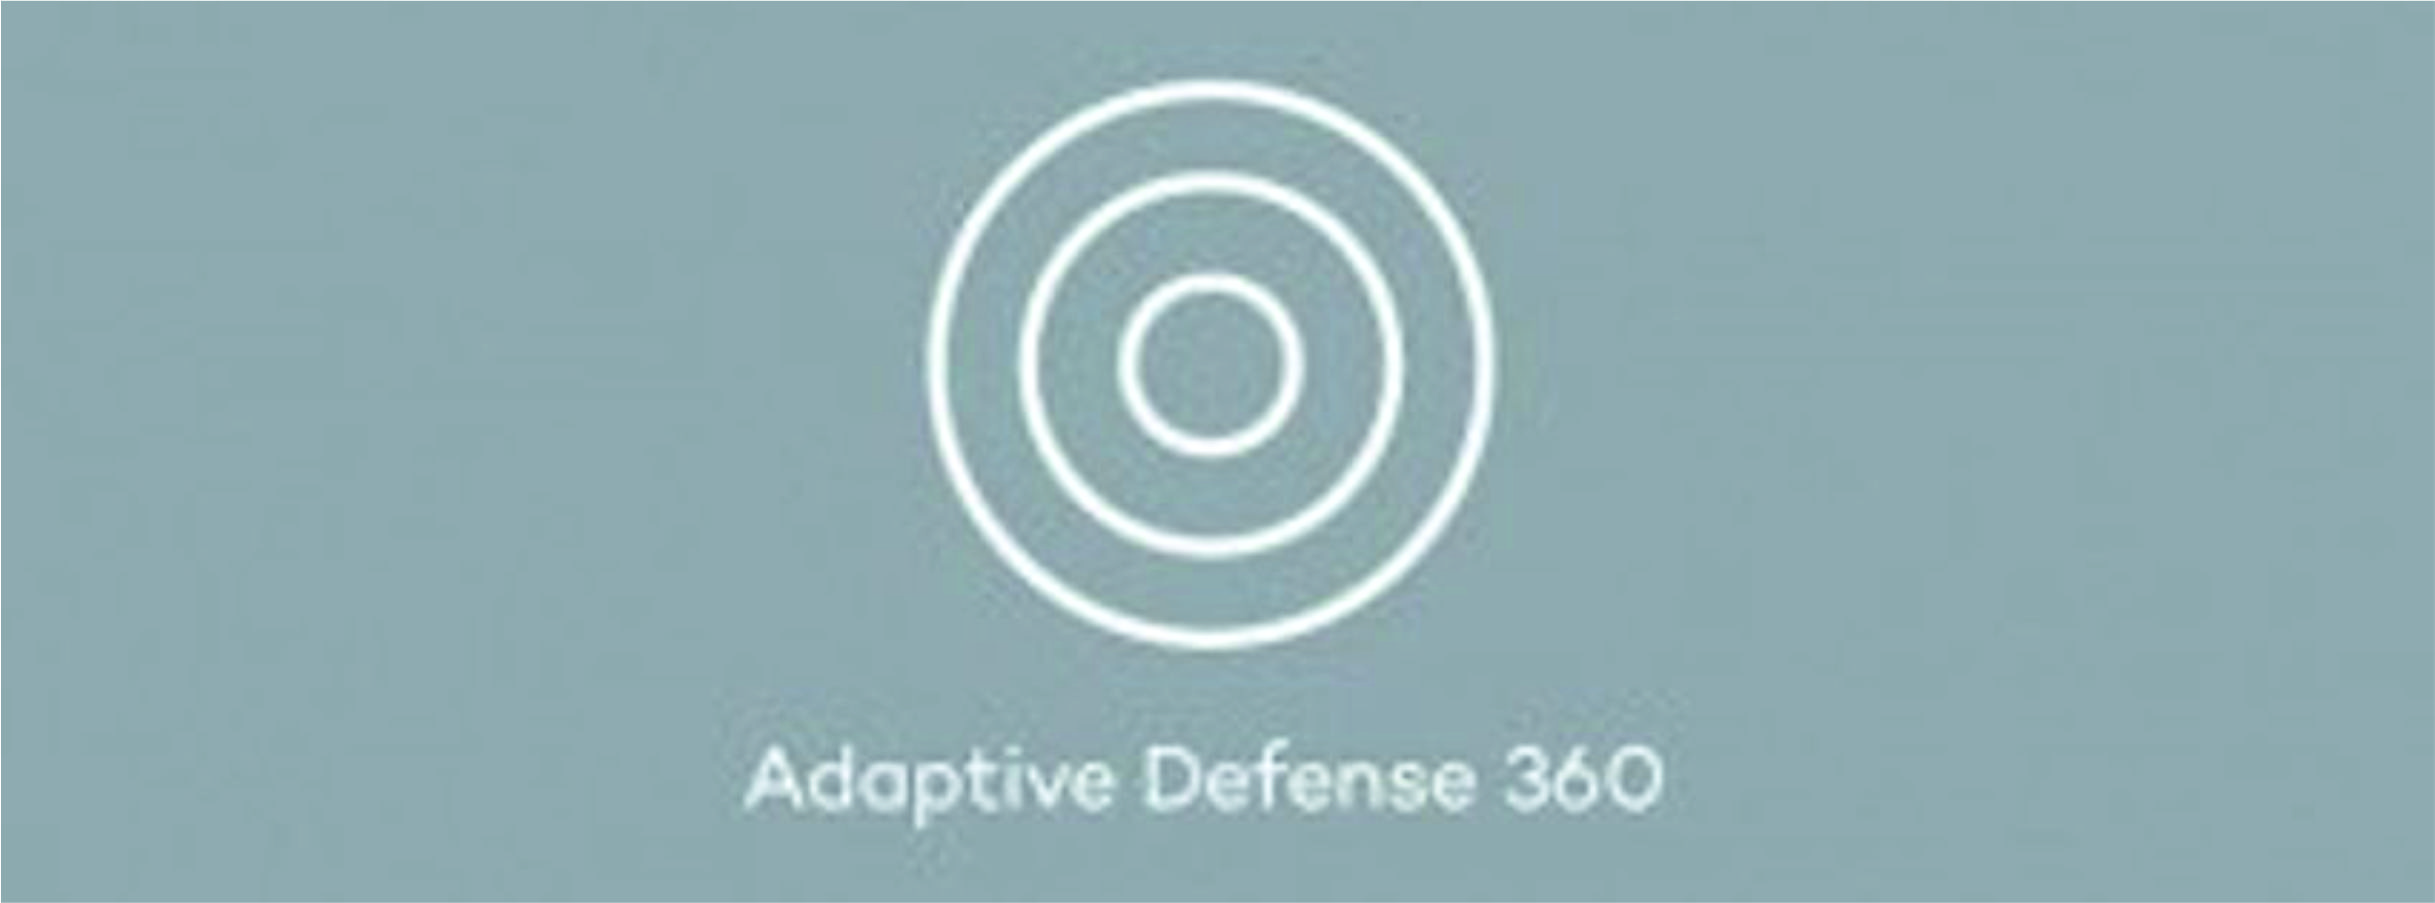 Adaptive Defense 360